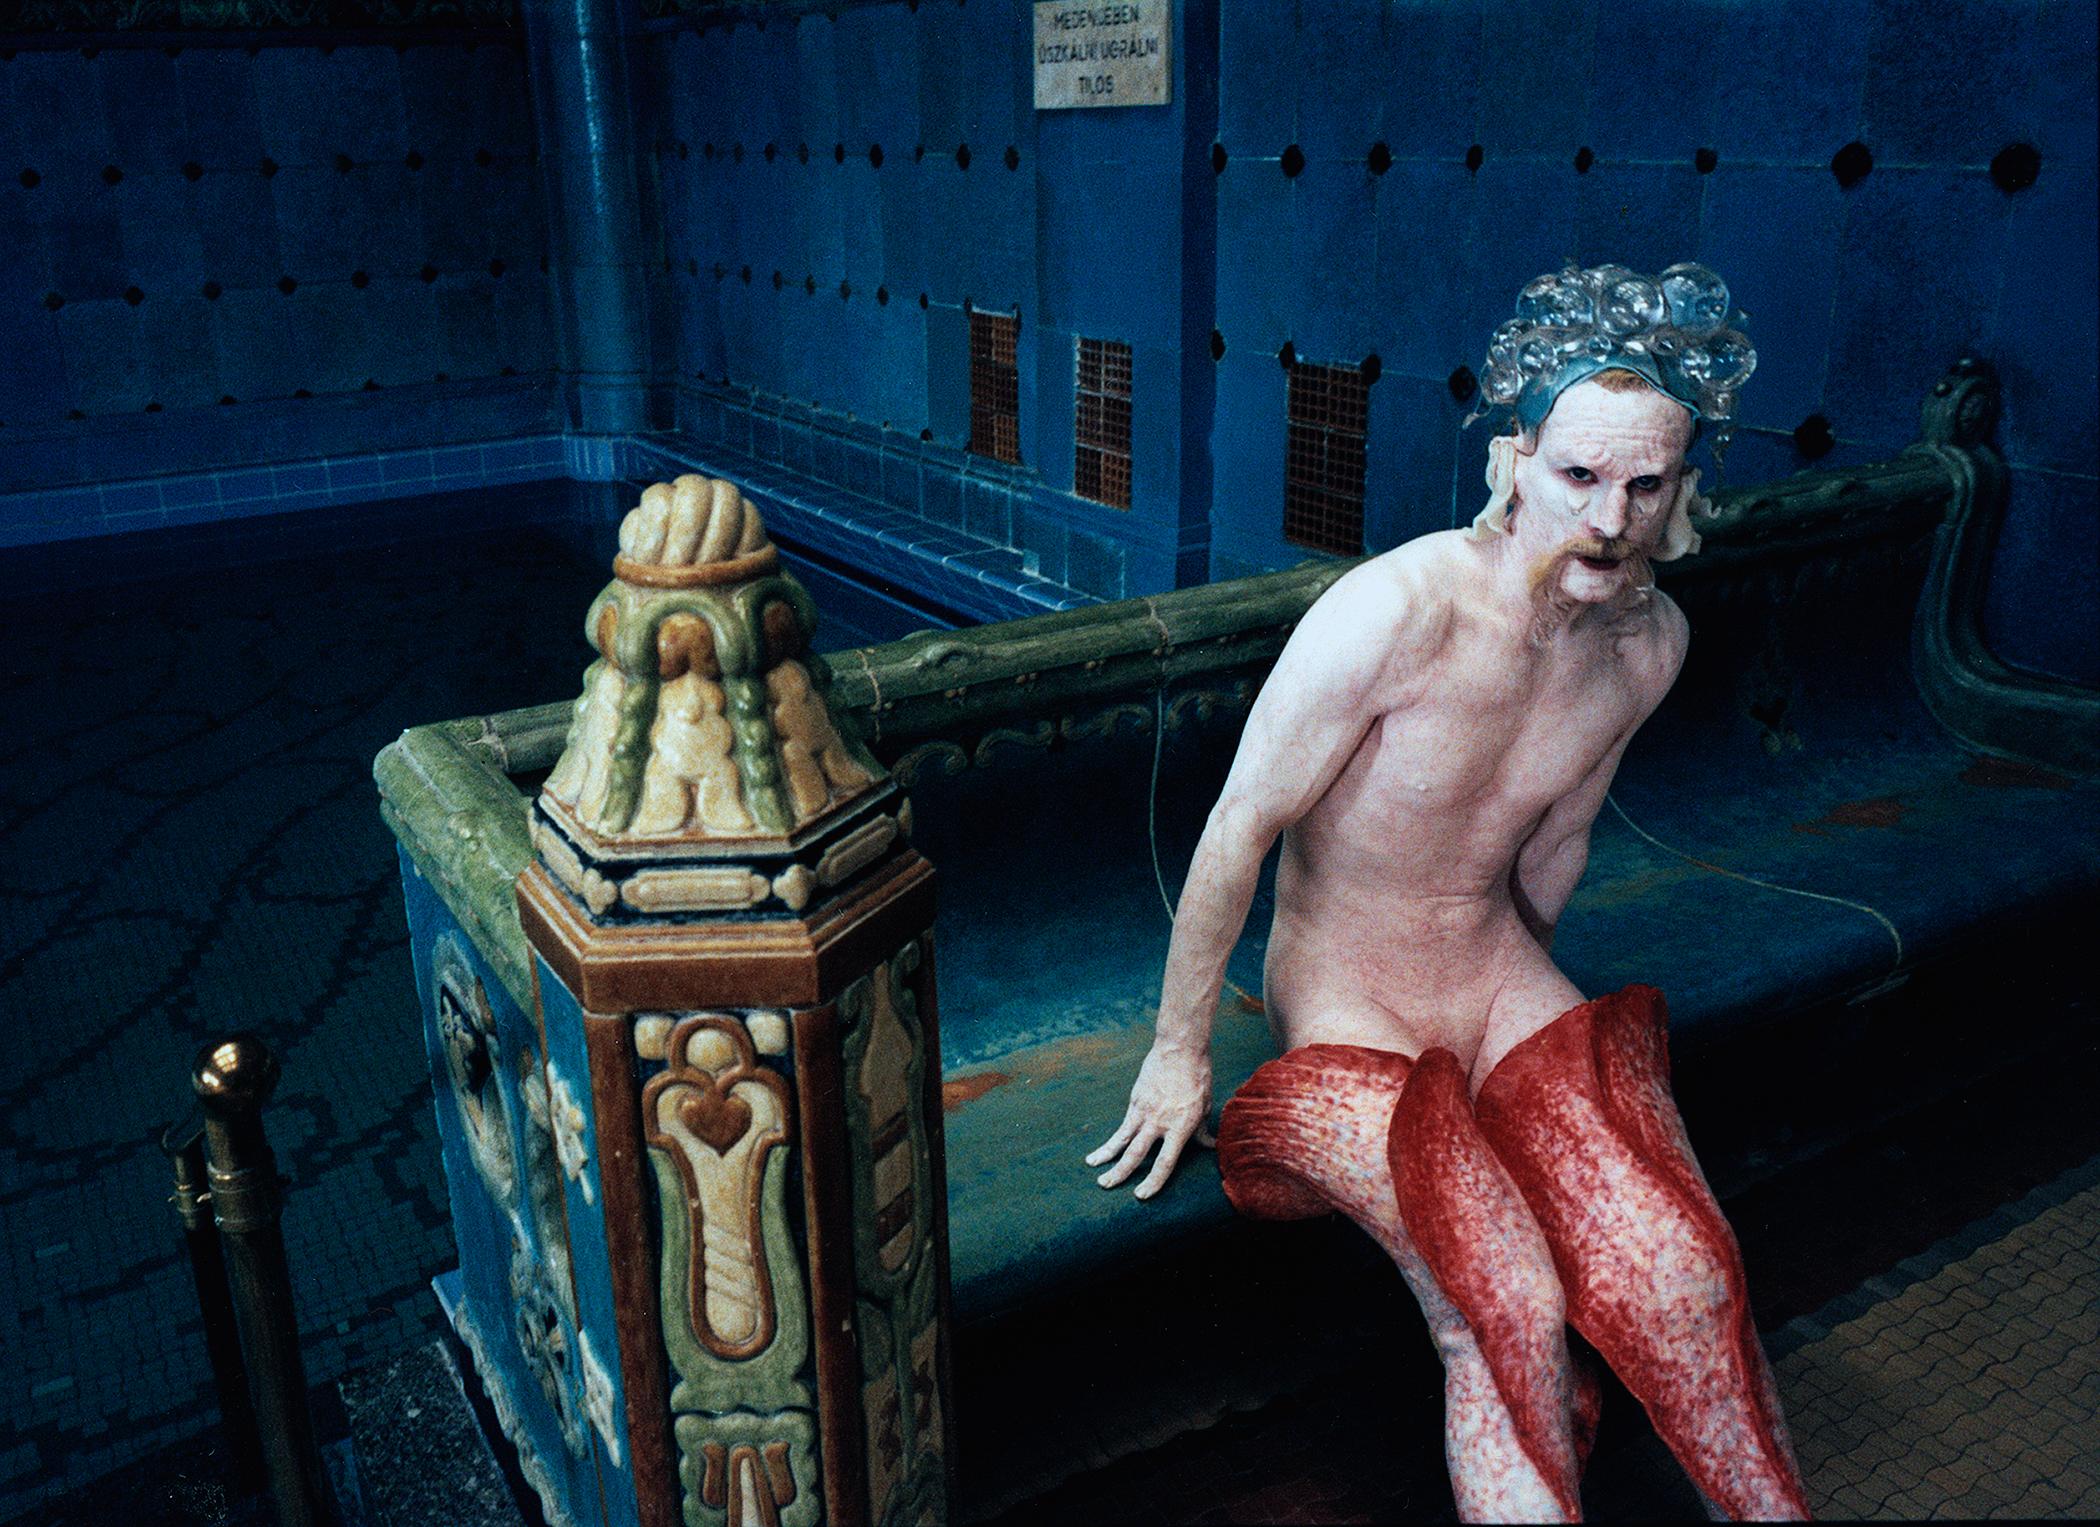 Michael James O’Brien Figurative Photograph - Matthew Barney, Cremaster 5, Limited edition color photograph.